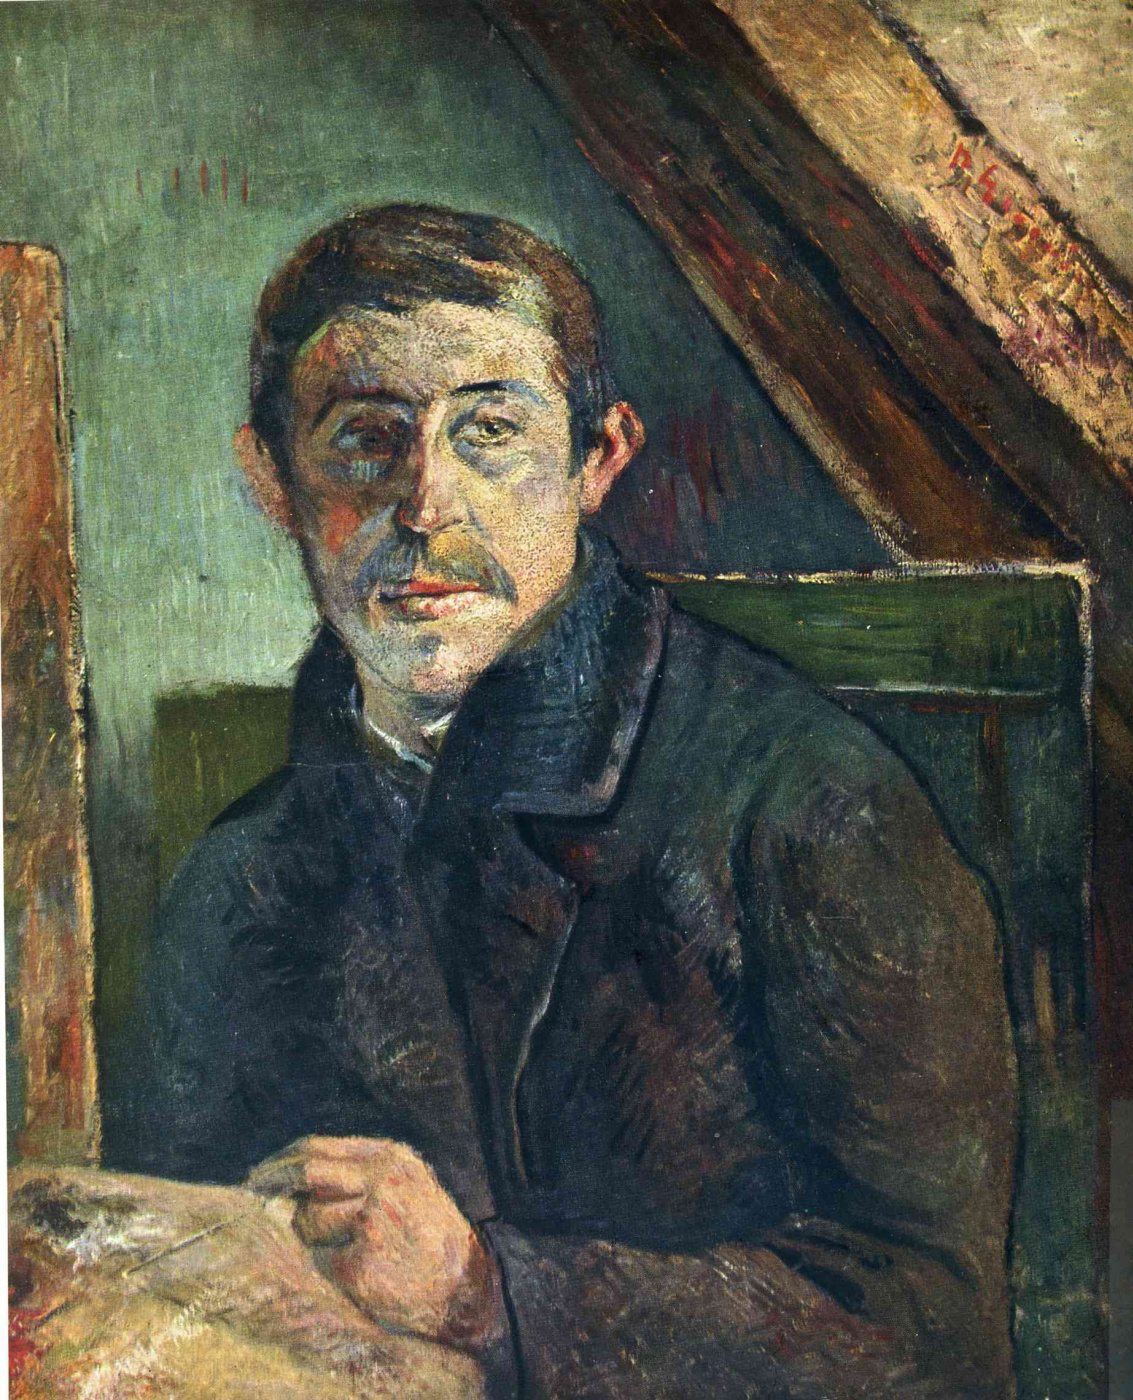 Buy digital version: Self portrait by Paul Gauguin Arthive